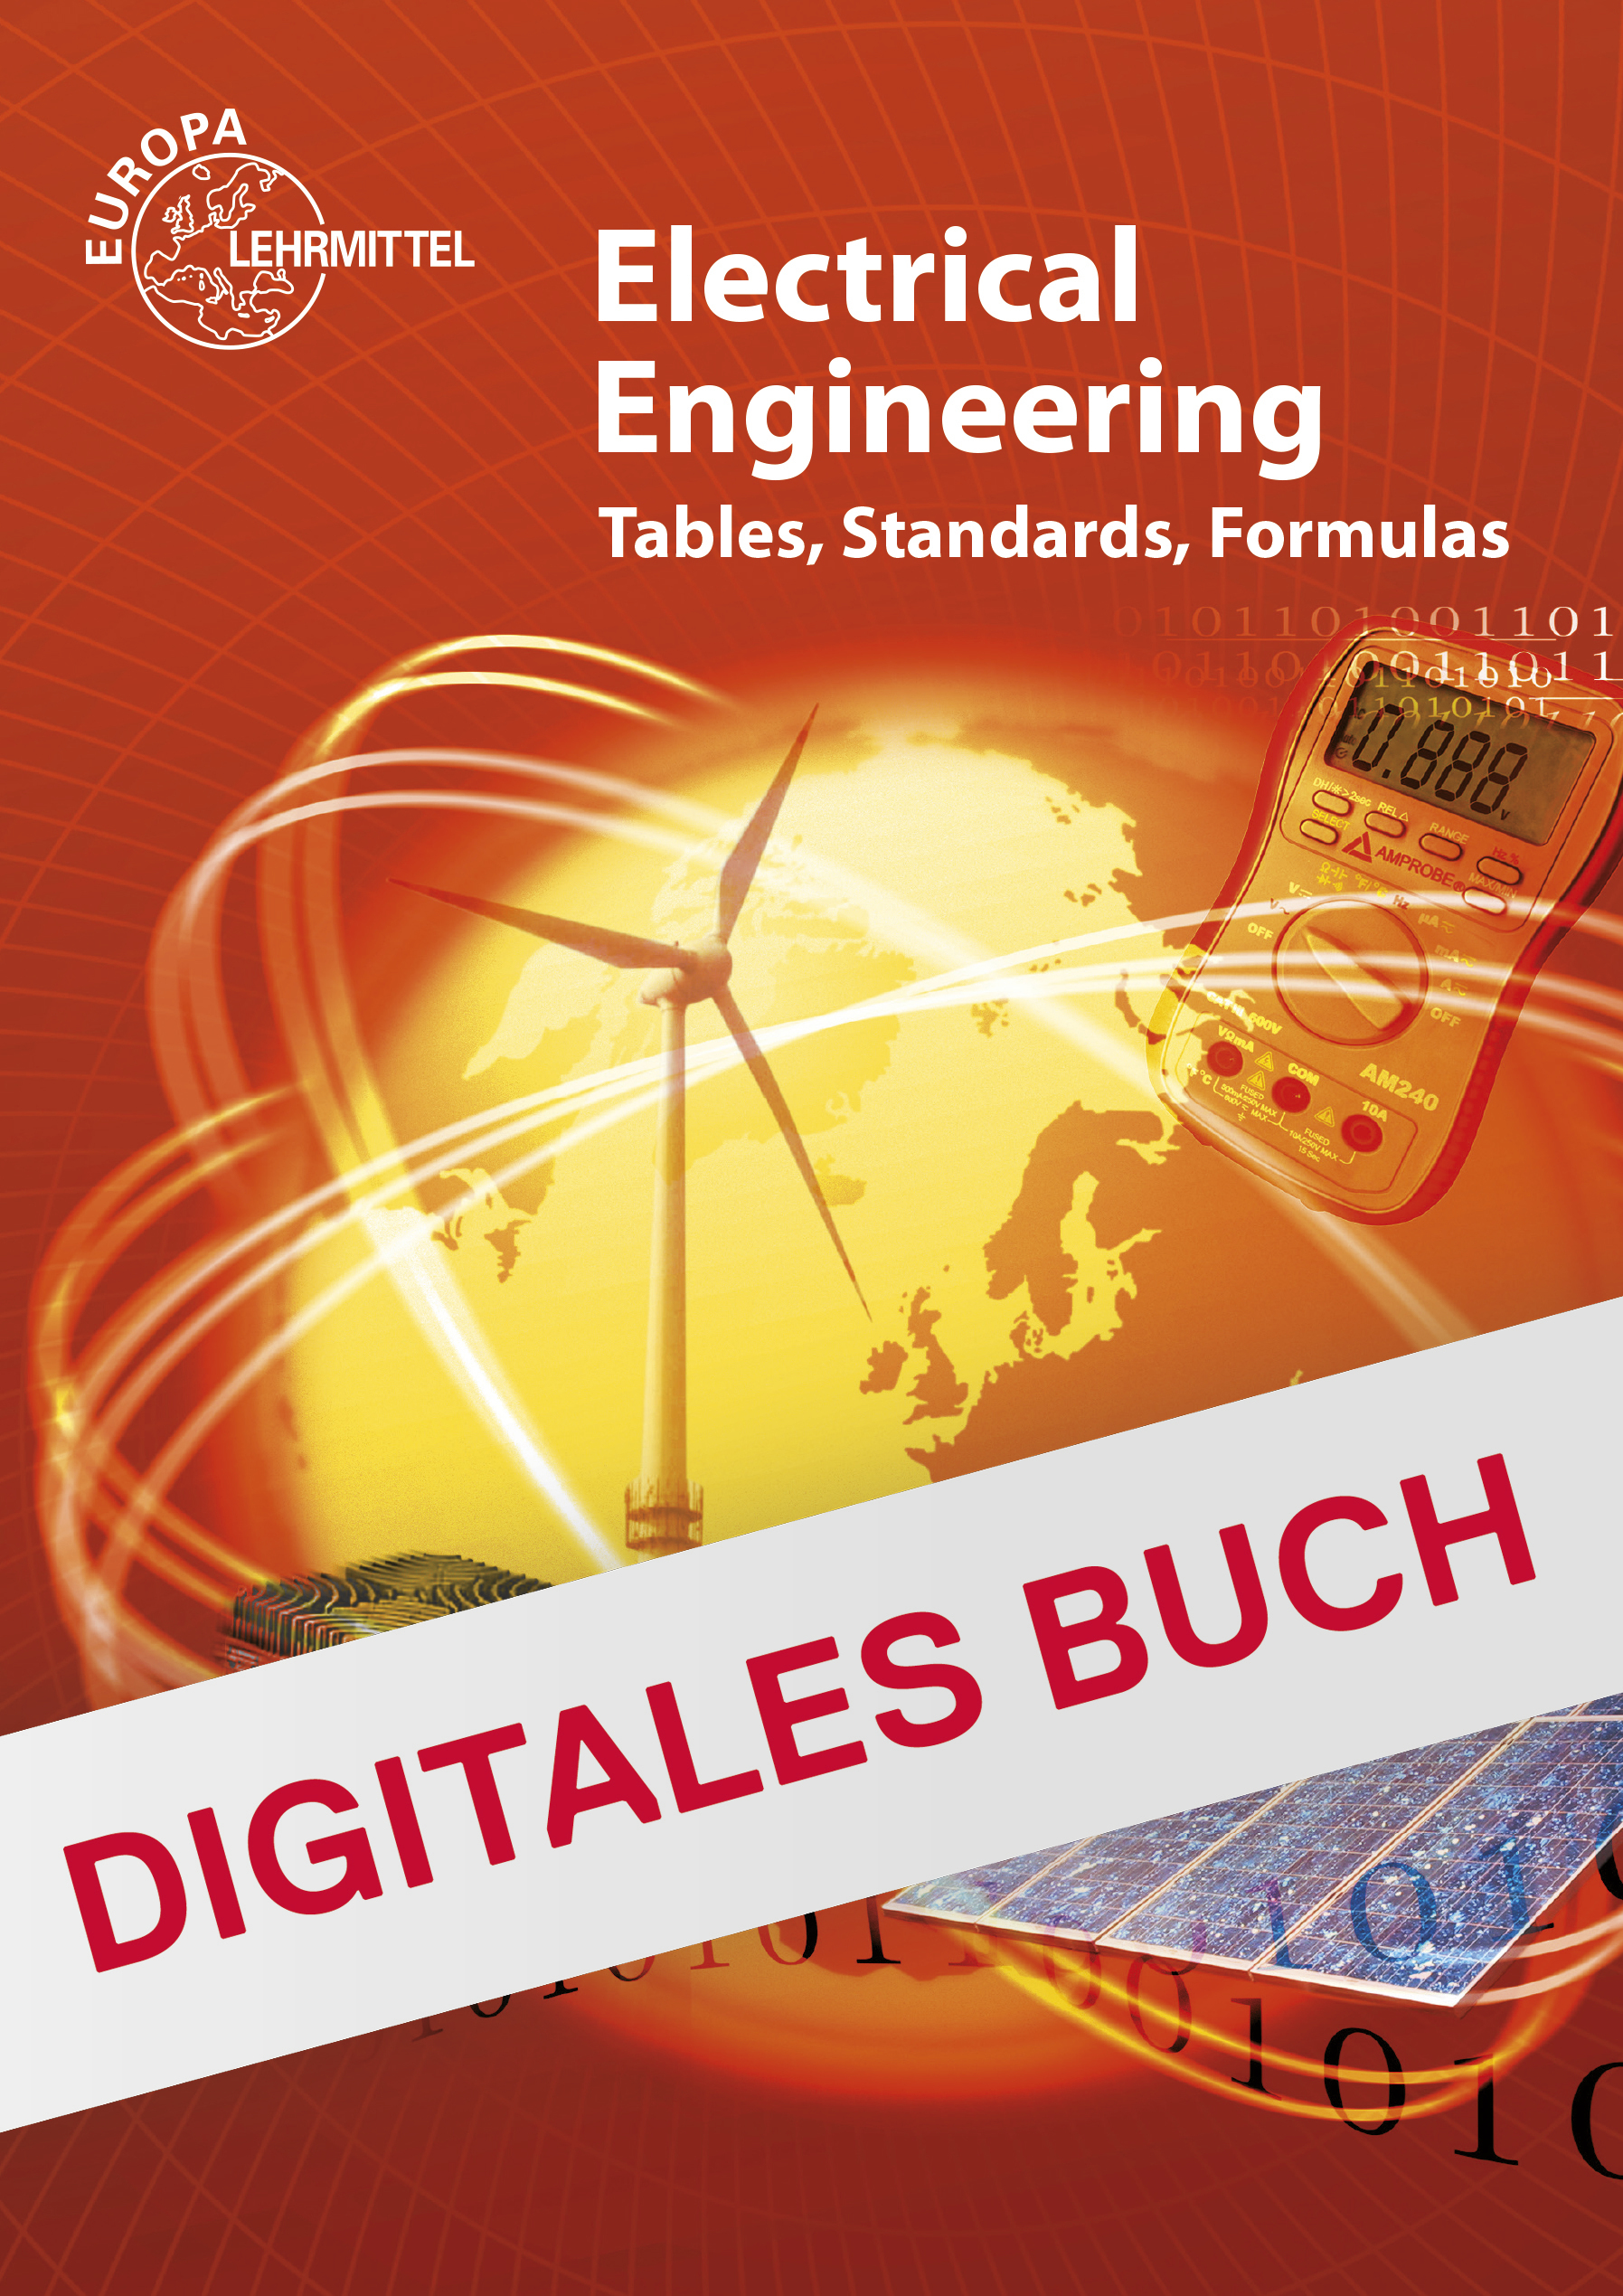 Electrical Engineering Tables, Standards, Formulas - Digitales Buch